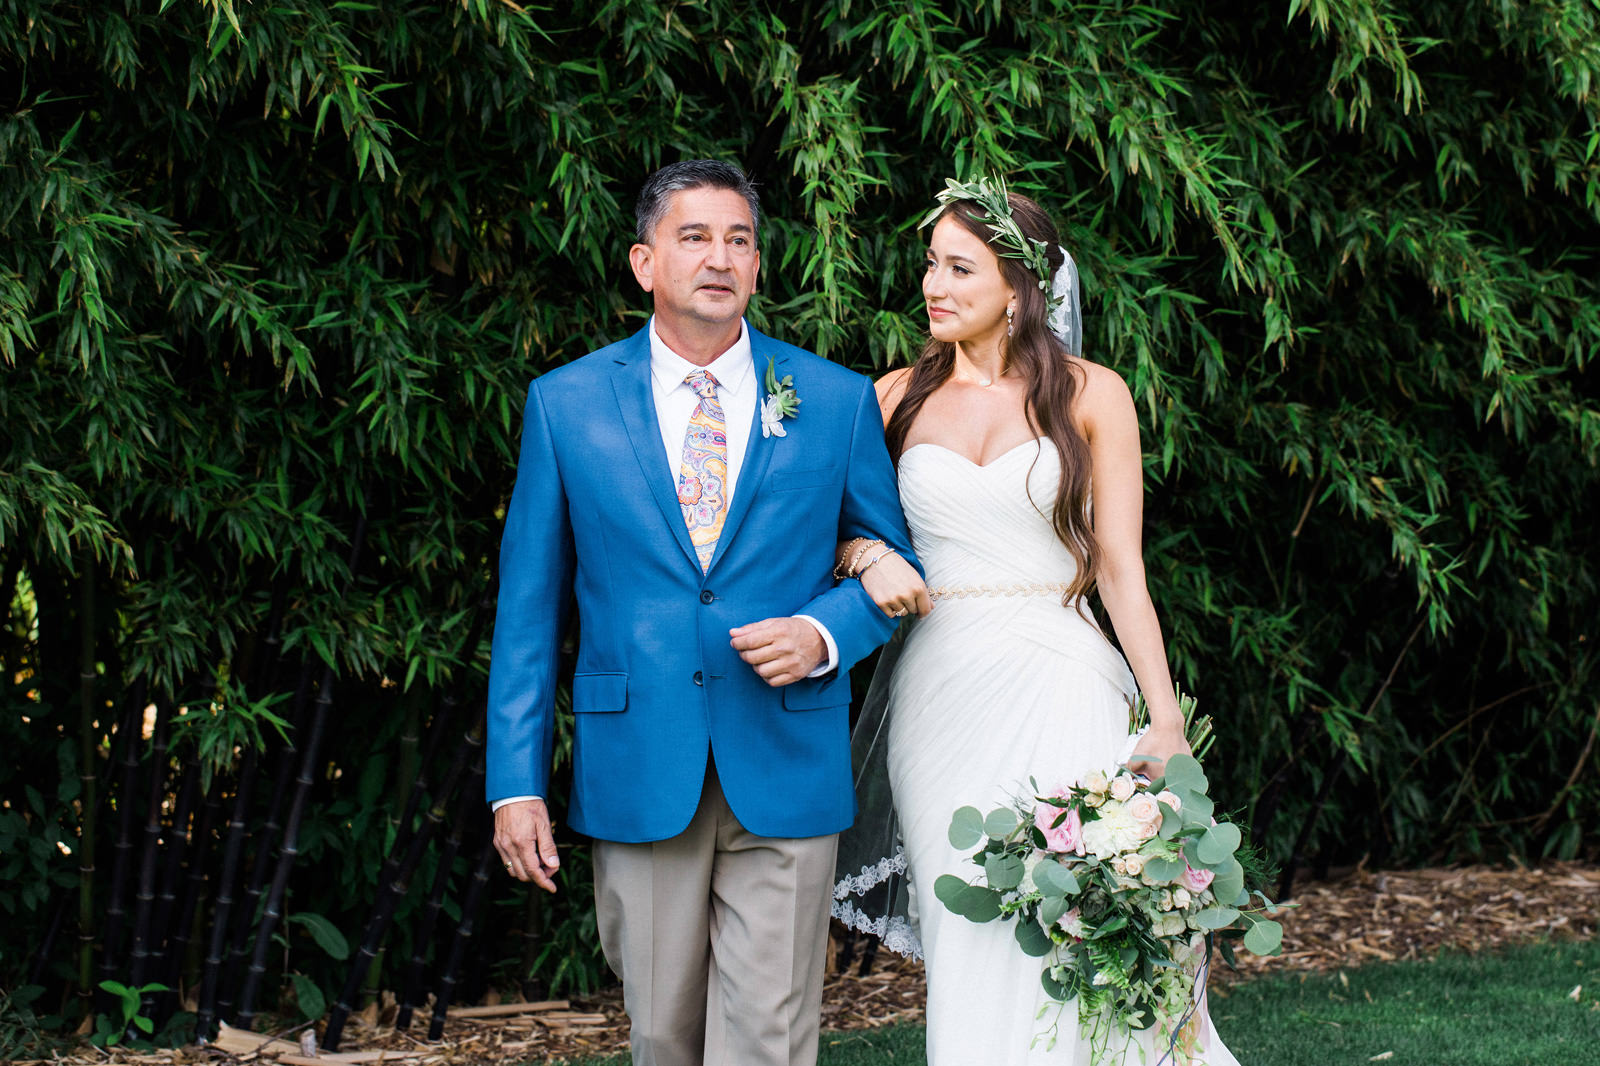 036-woodinville-lavendar-farm-wedding-with-golden-glowy-photos.jpg